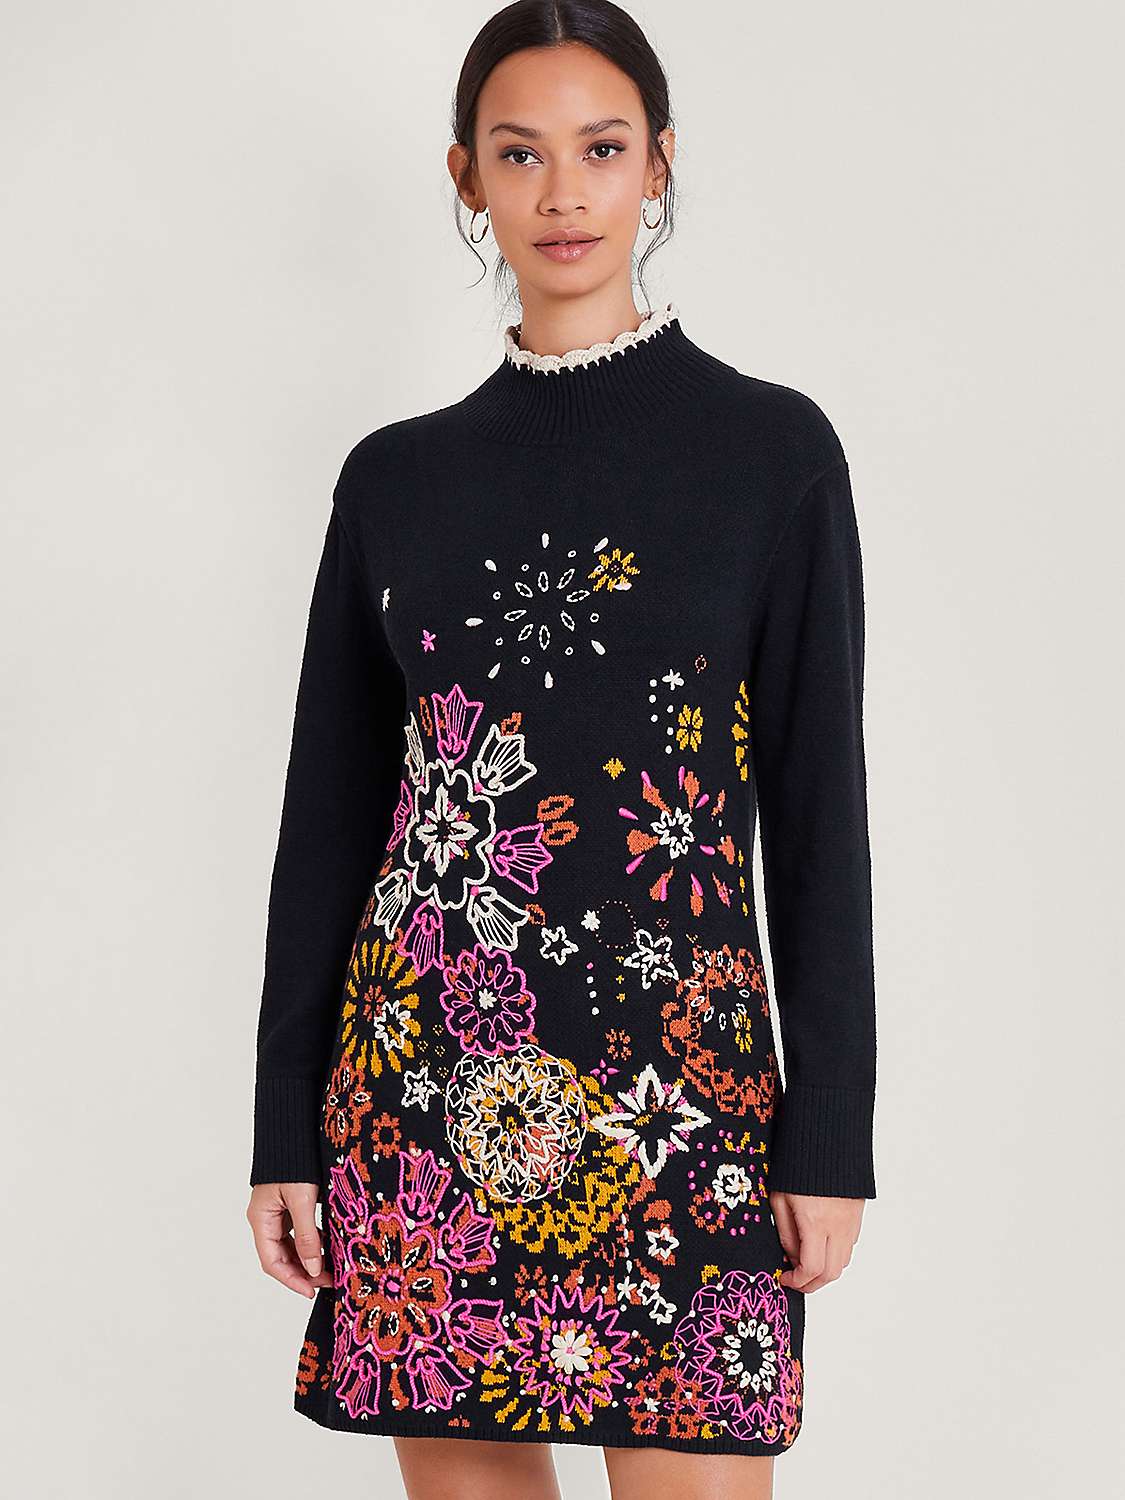 Monsoon Eve Embroidered Mini Dress, Black at John Lewis & Partners